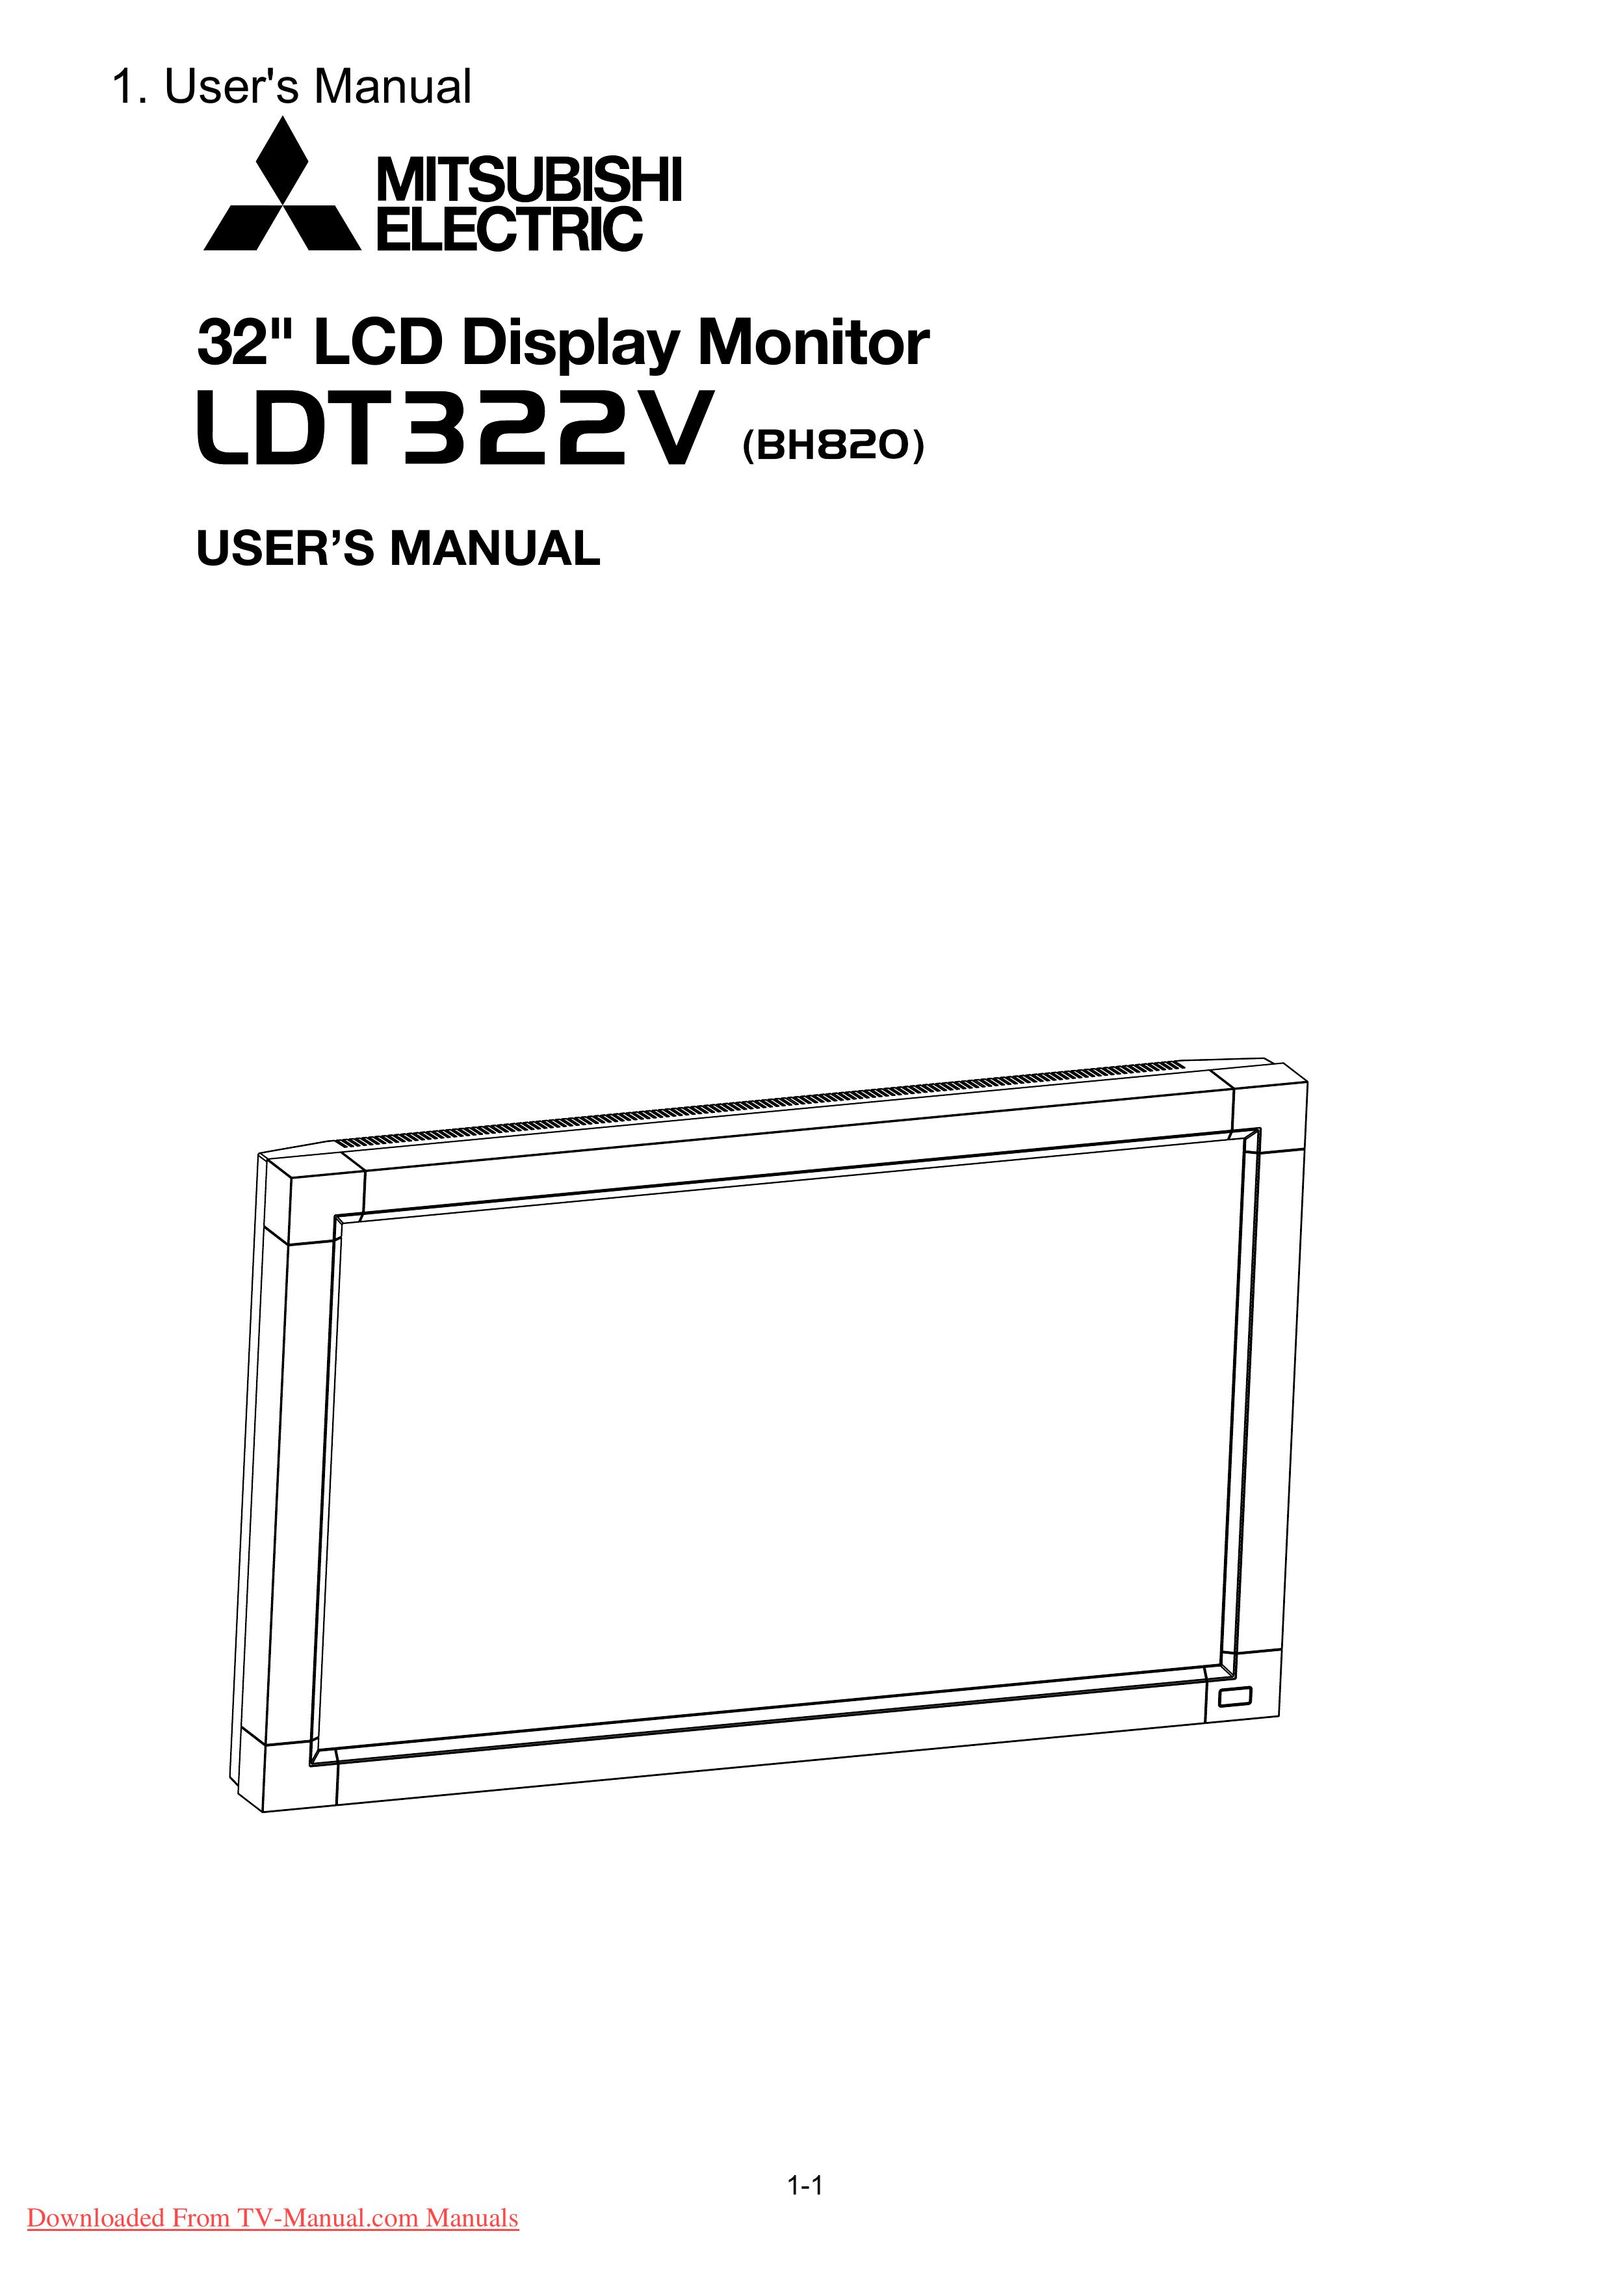 Mitsumi electronic LDT322V Flat Panel Television User Manual